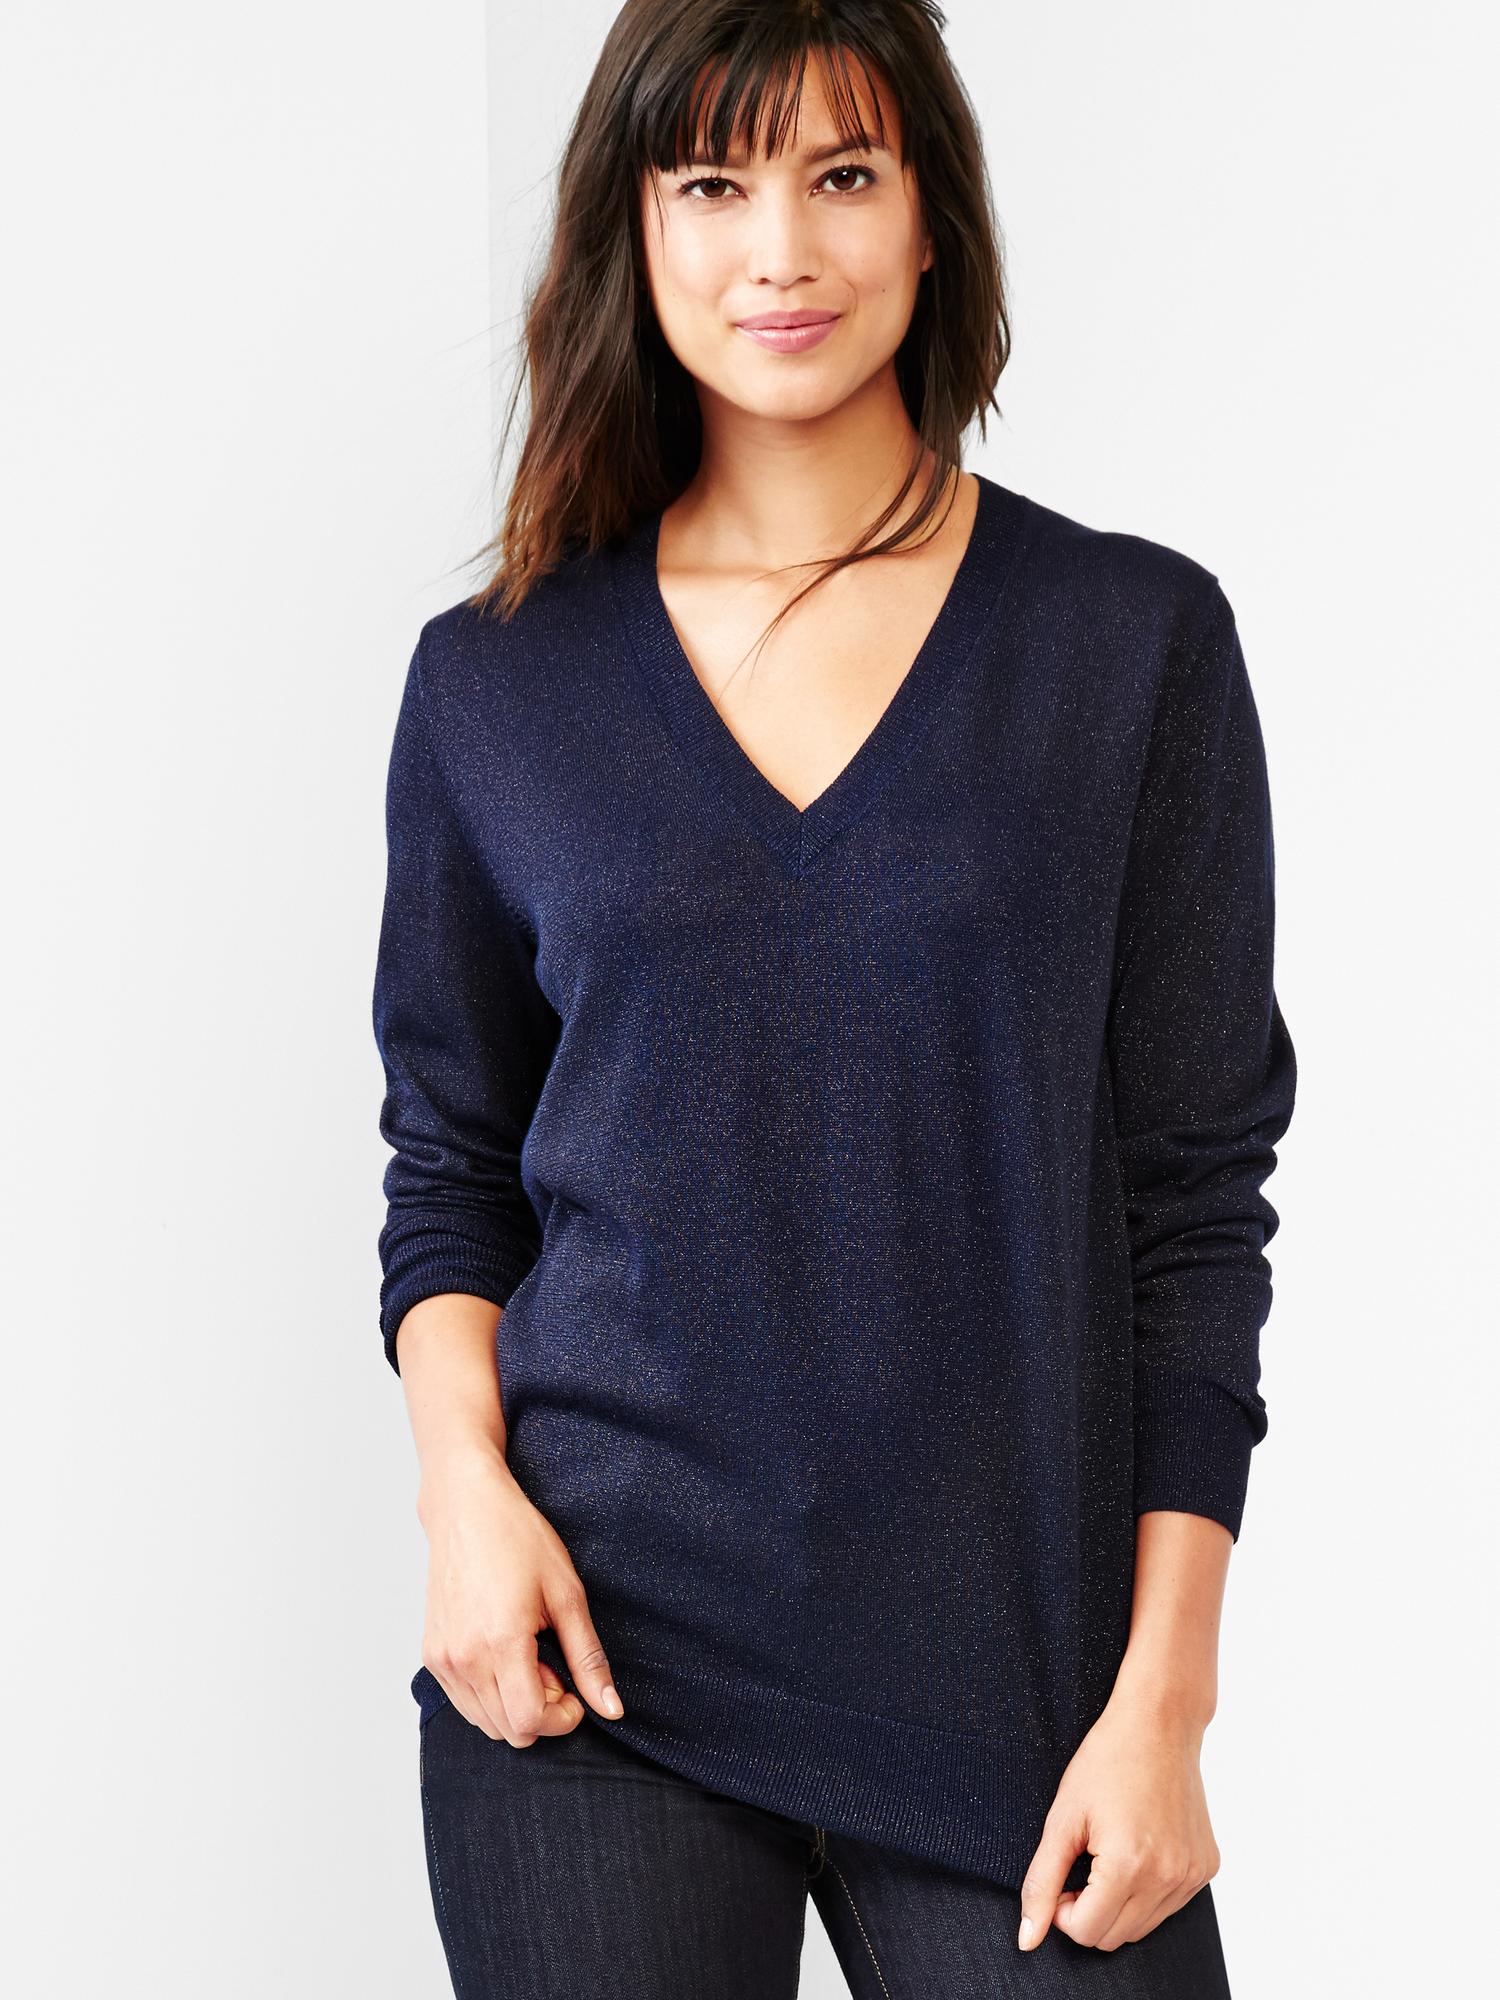 Shimmer V-neck sweater | Gap